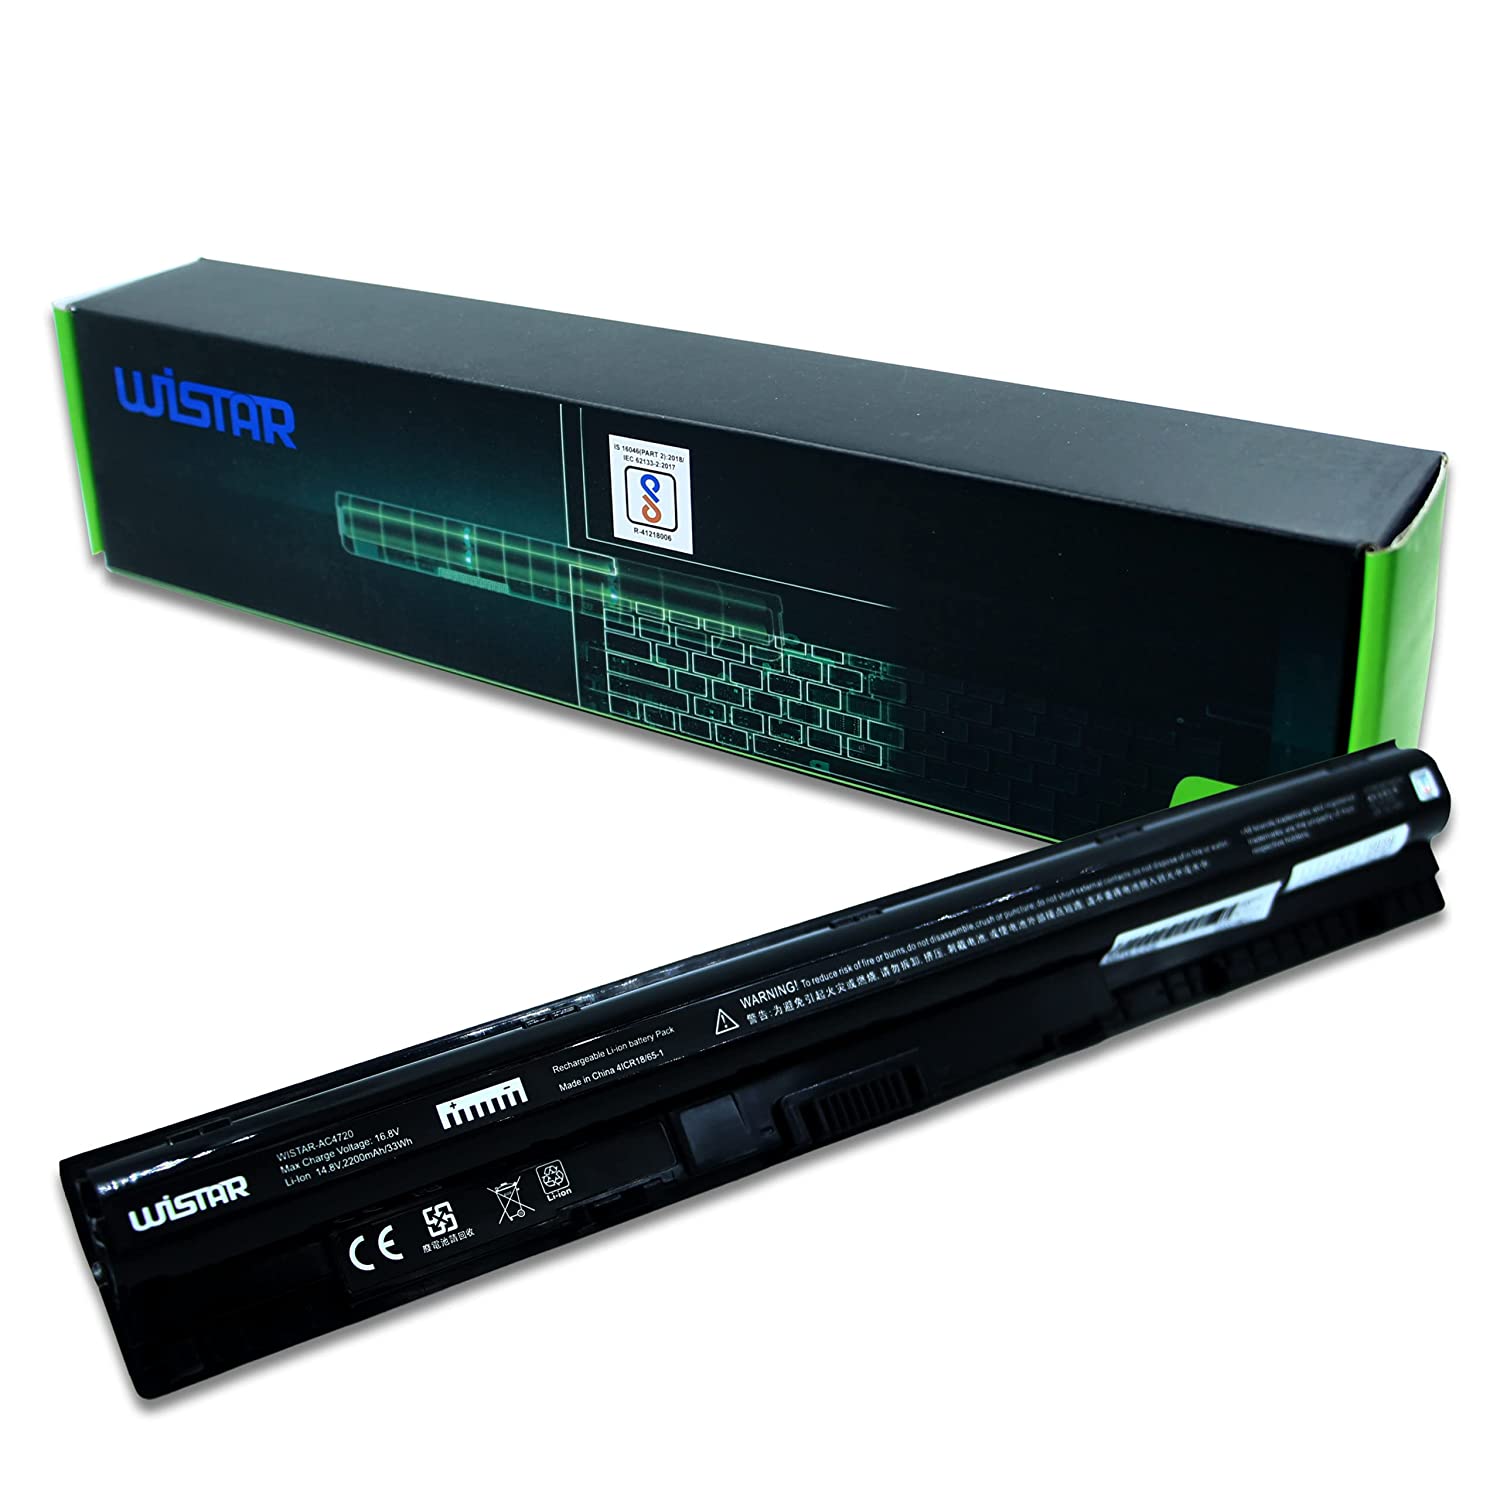 WISTAR M5Y1K Laptop Battery for Dell Inspiron 15 5000 3000 Series 5559 5566 5558 5555 17 5758 5759 5755 5551 3551 3552 3558 14 3451 3452 5458 P51F P47F P63F P64G GXVJ3 453-BBBP HD4J0 WKRJ2